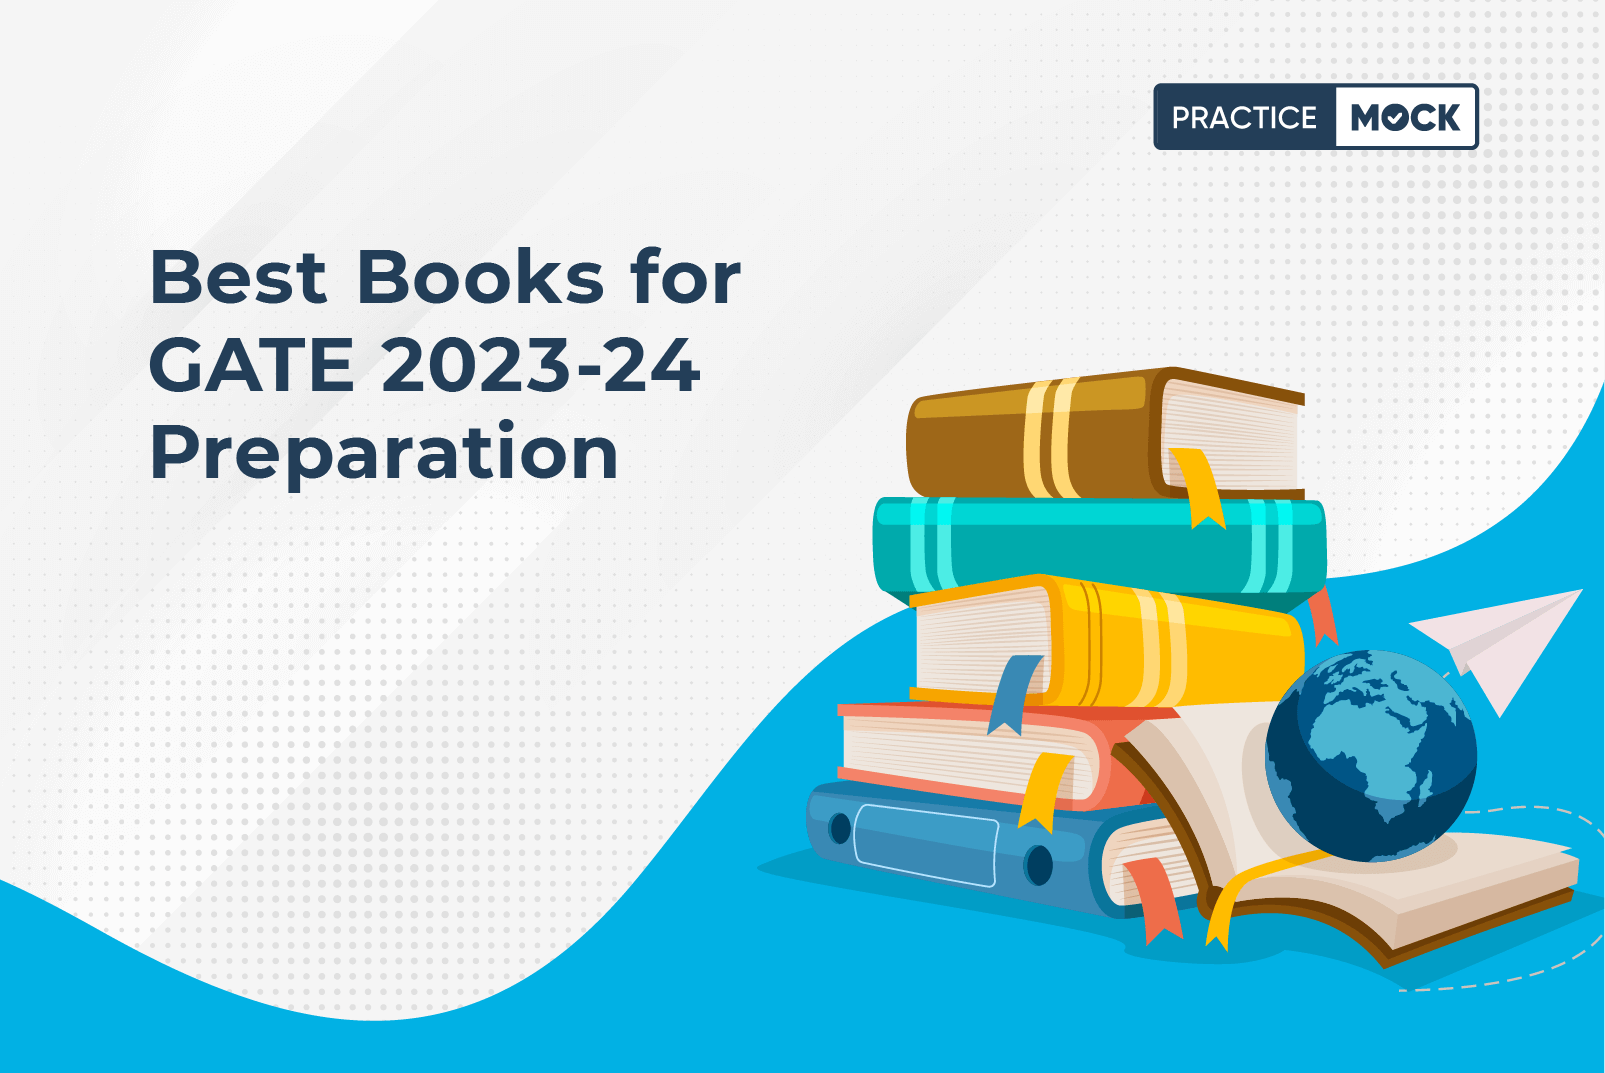 Best Books for GATE 2023-24 Preparation